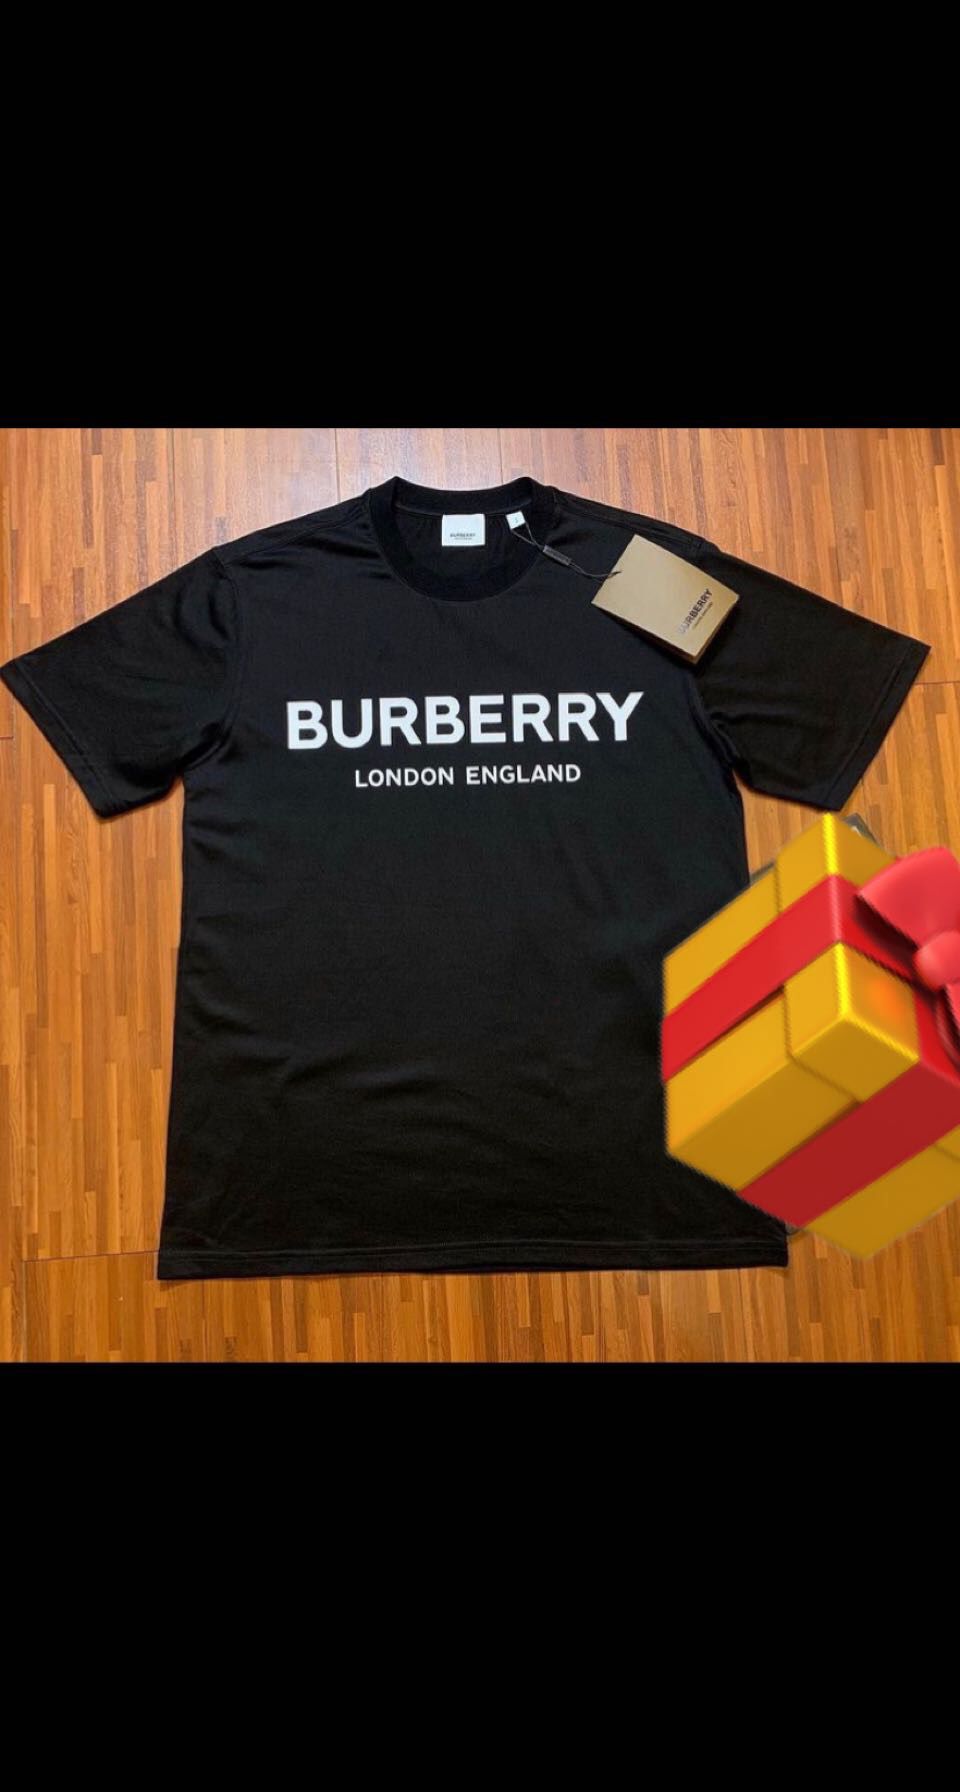 Burberry logo Print t-shirt size small and medium